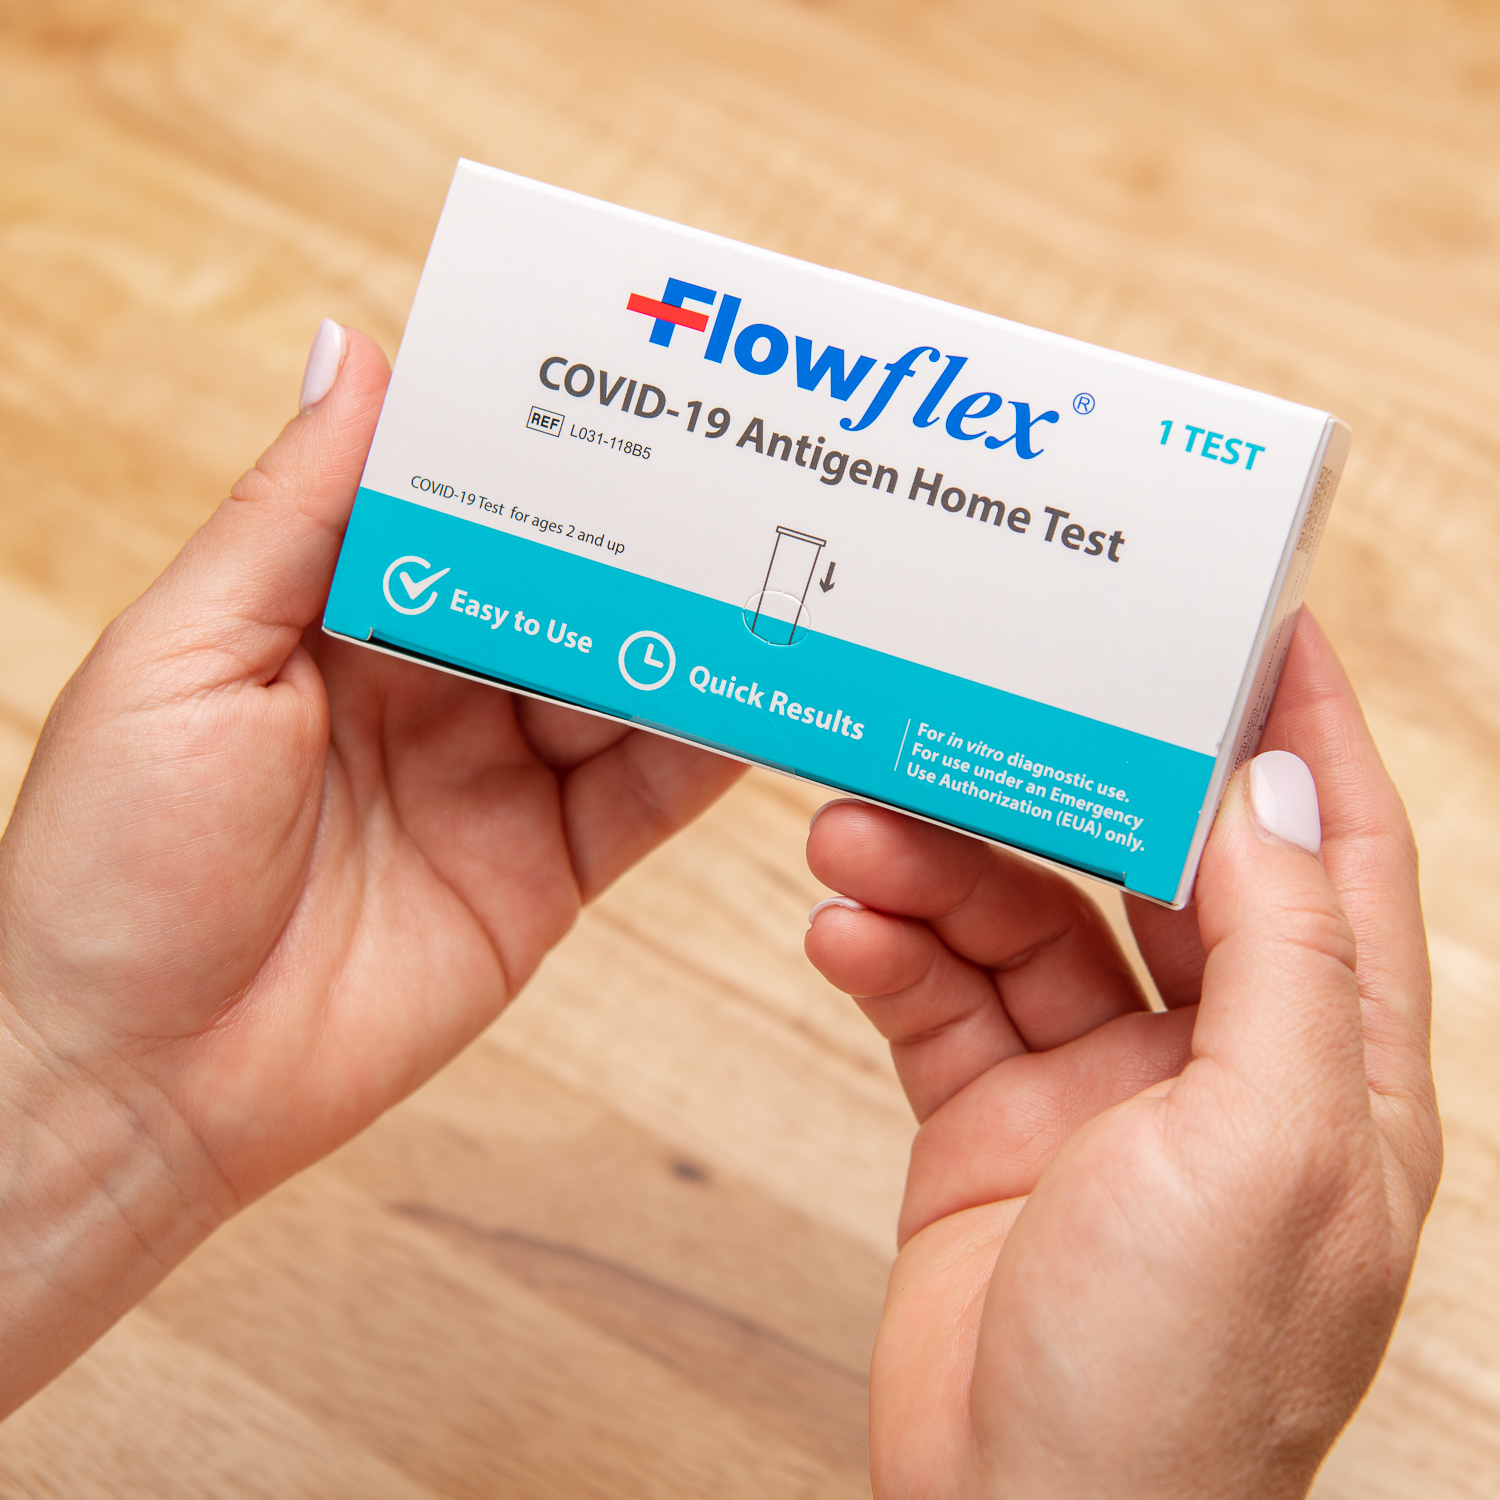 Box of 5 flowflex covid-19 antigen self-tests per nasal swab